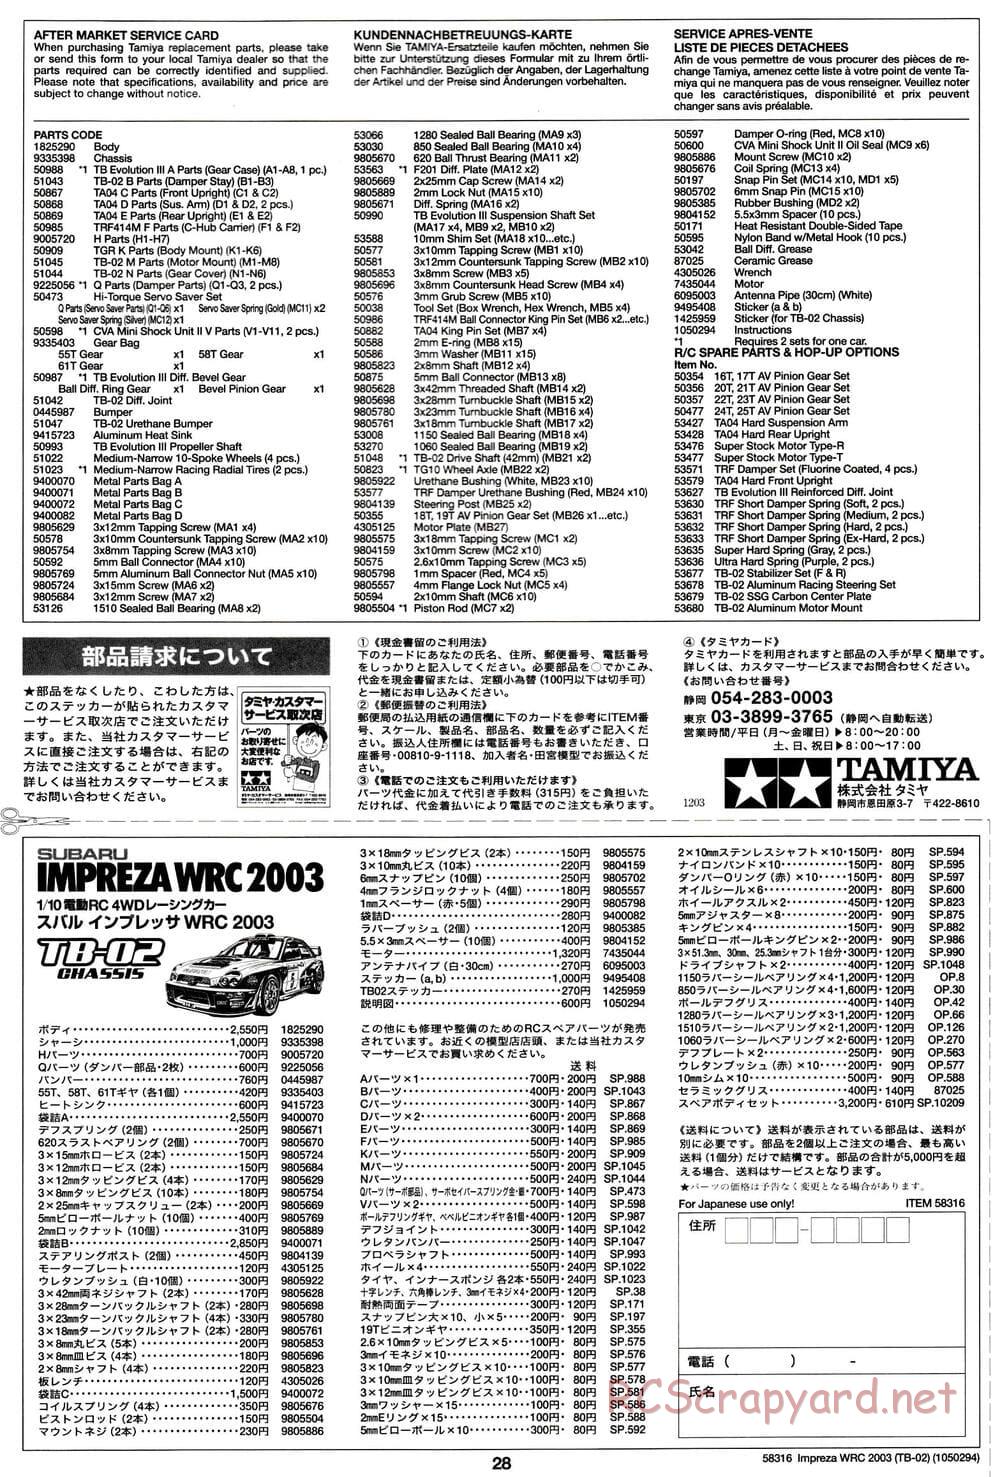 Tamiya - Subaru Impreza WRC 2003 - TB-02 Chassis - Manual - Page 28